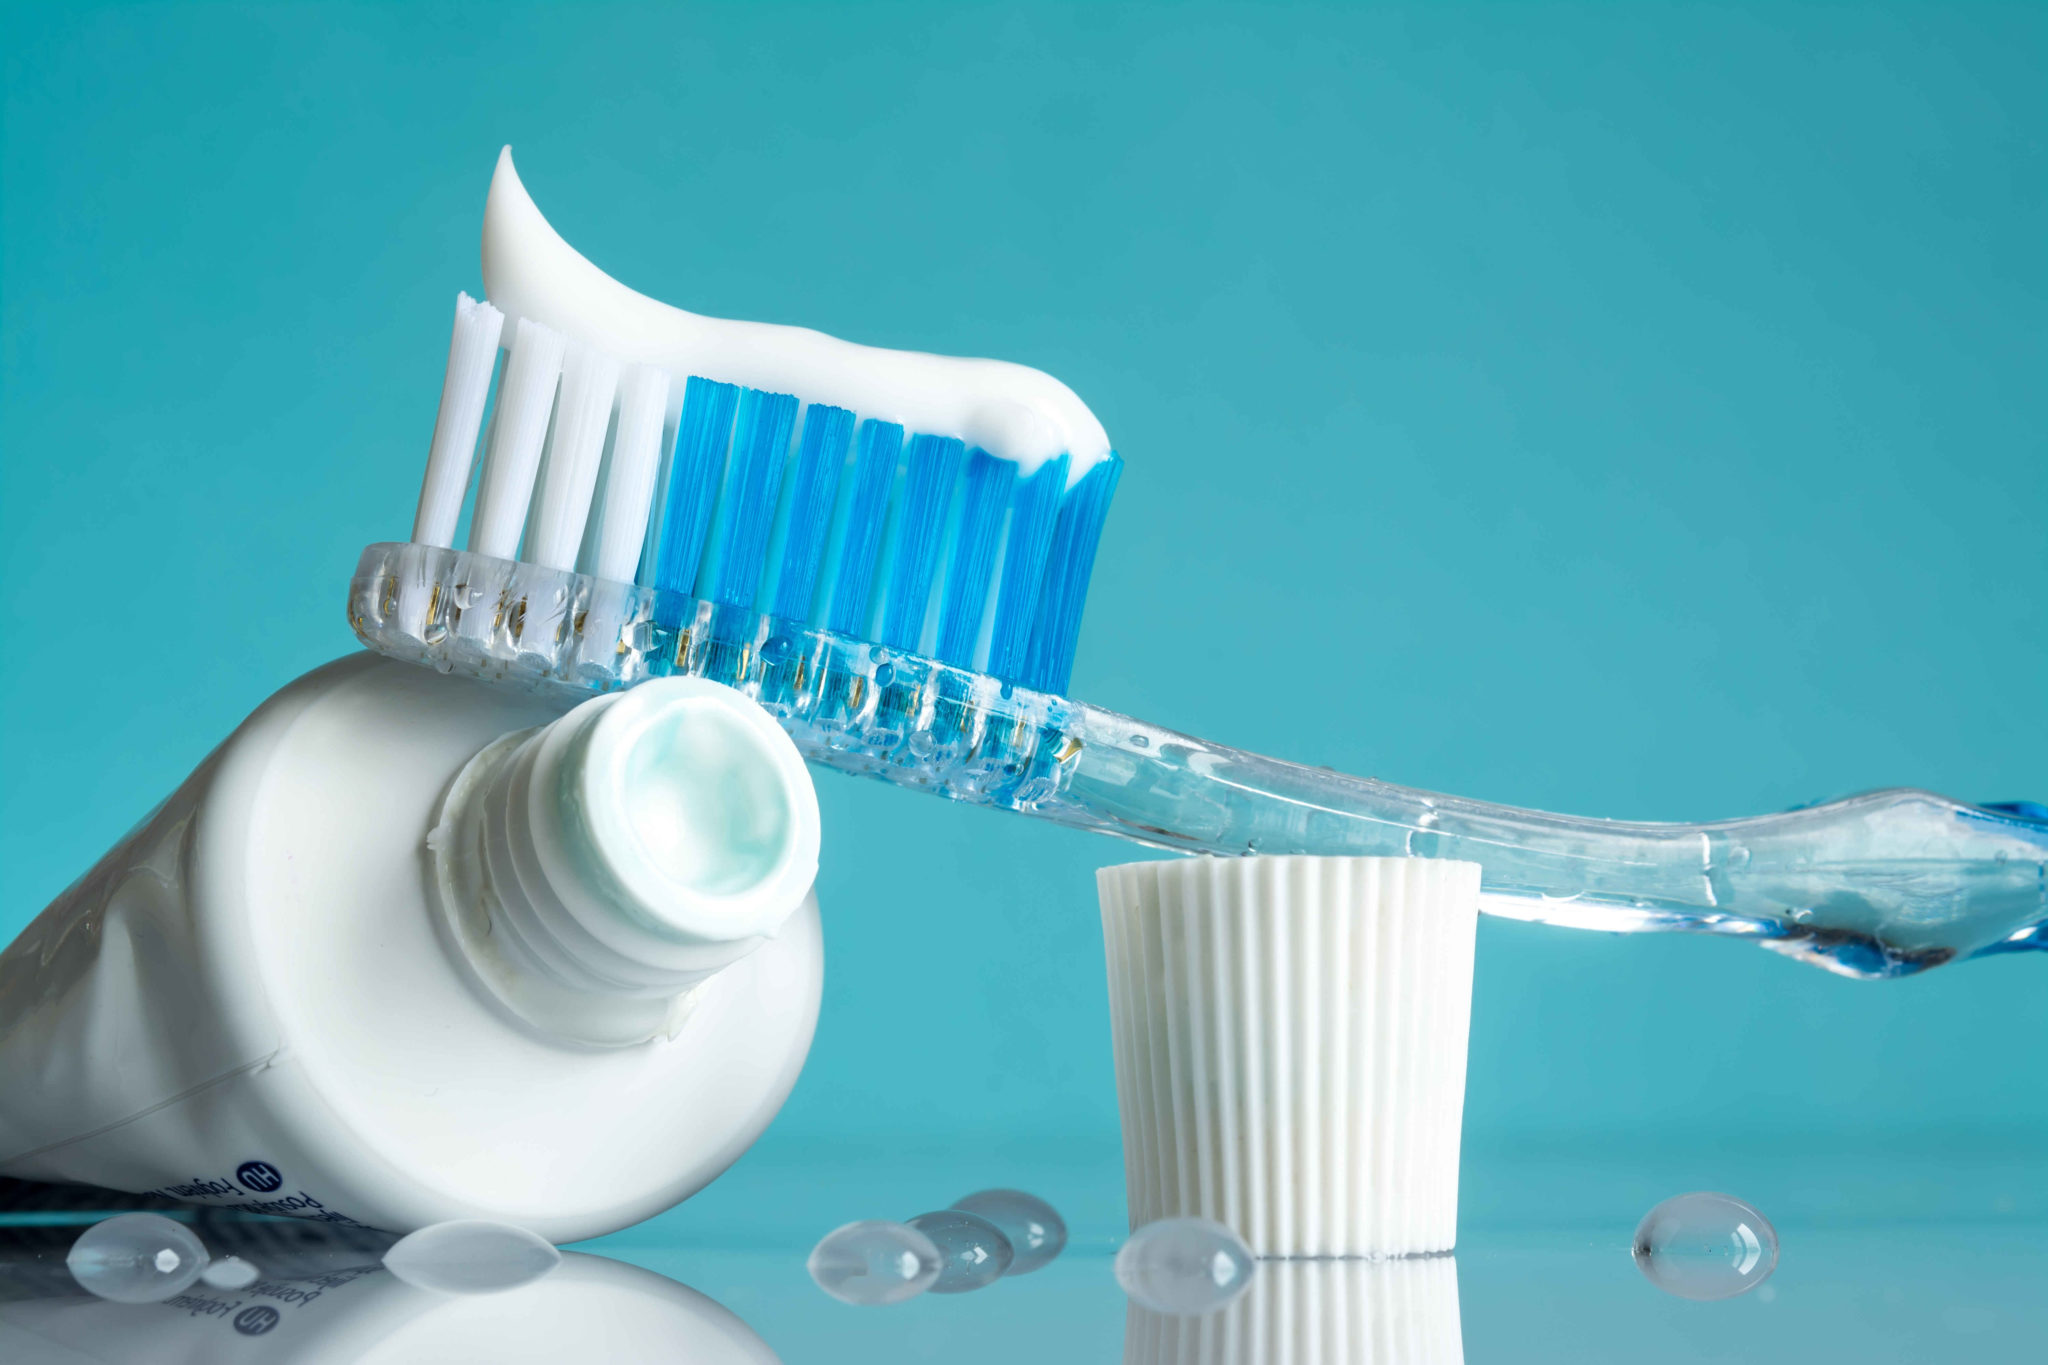 Choisir un dentifrice adaptÃ© Ã  vos dents - Helvident